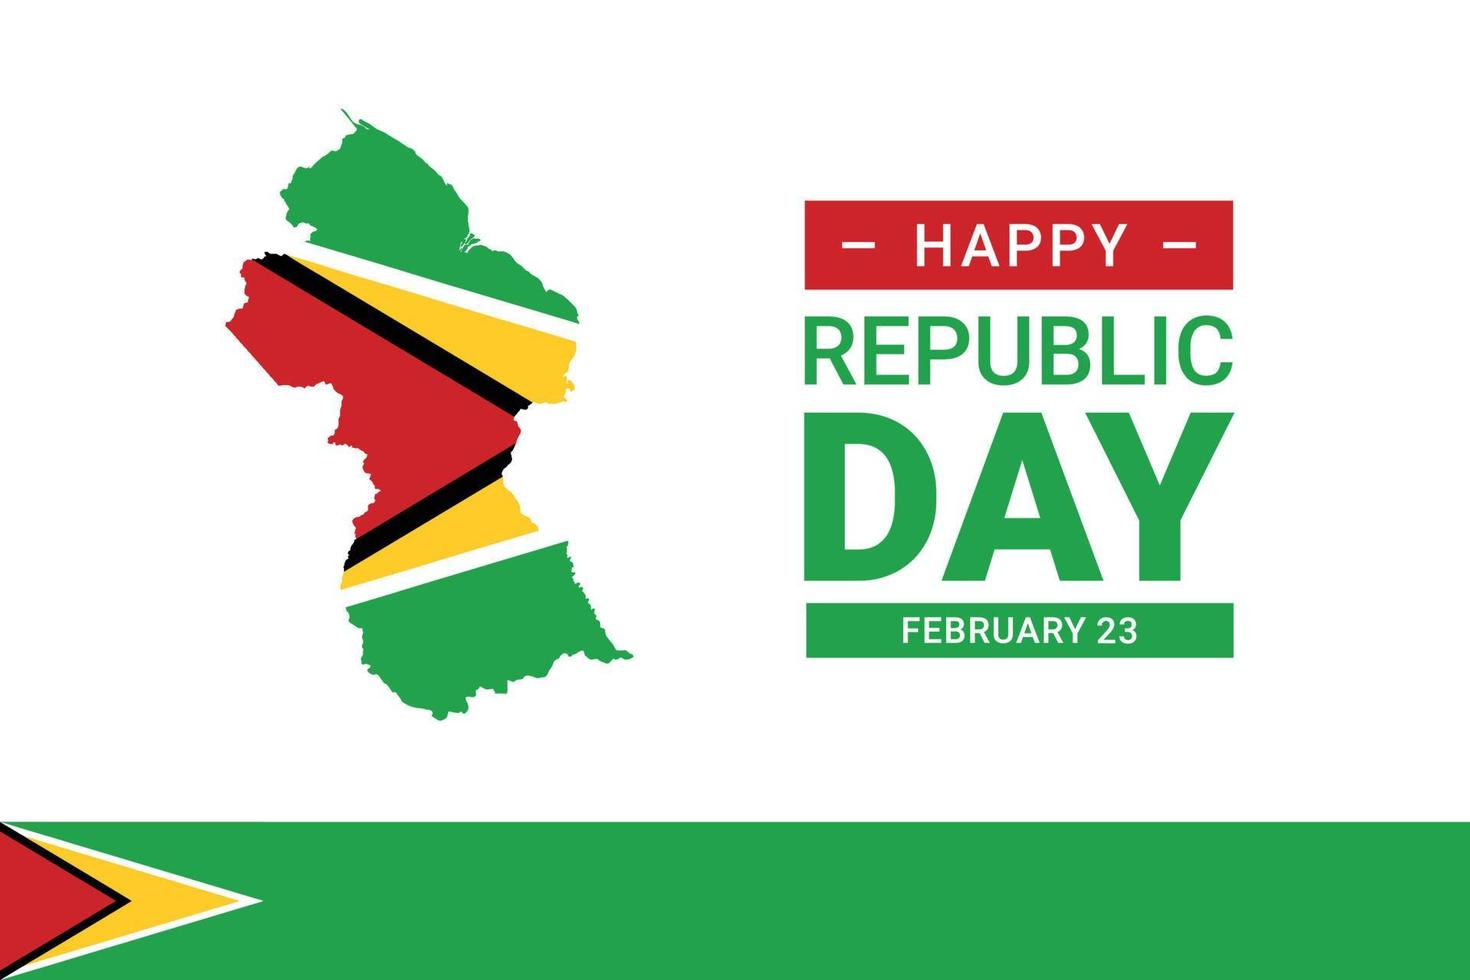 Guyana republikens dag vektor